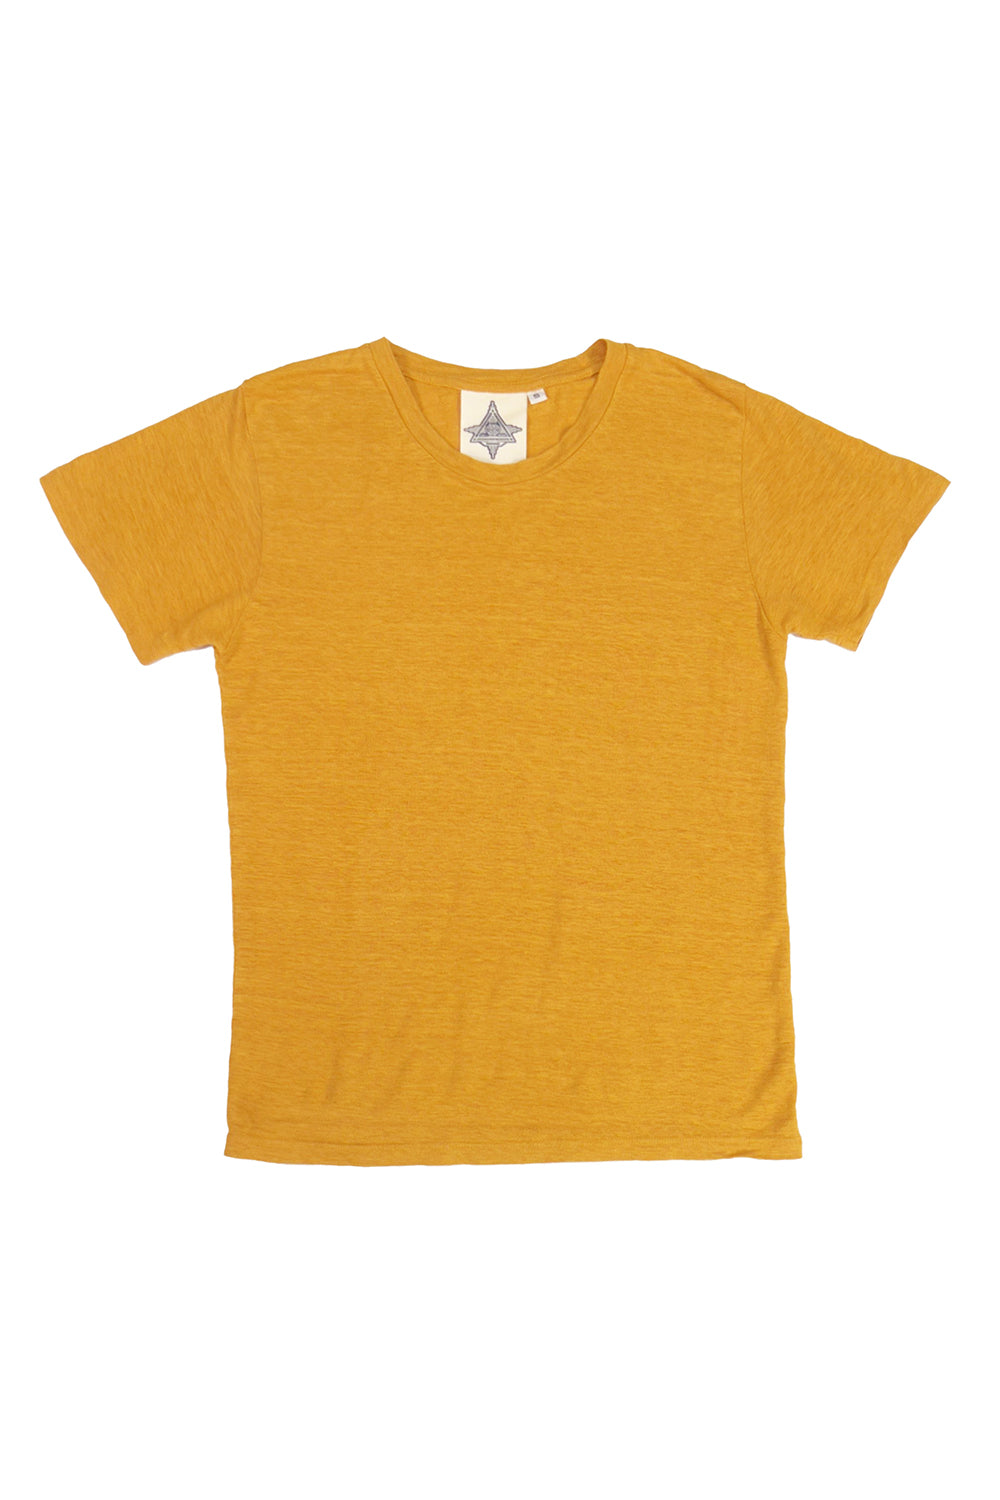 Madison 100% Hemp Tee | Jungmaven Hemp Clothing & Accessories / Color: Mango Mojito